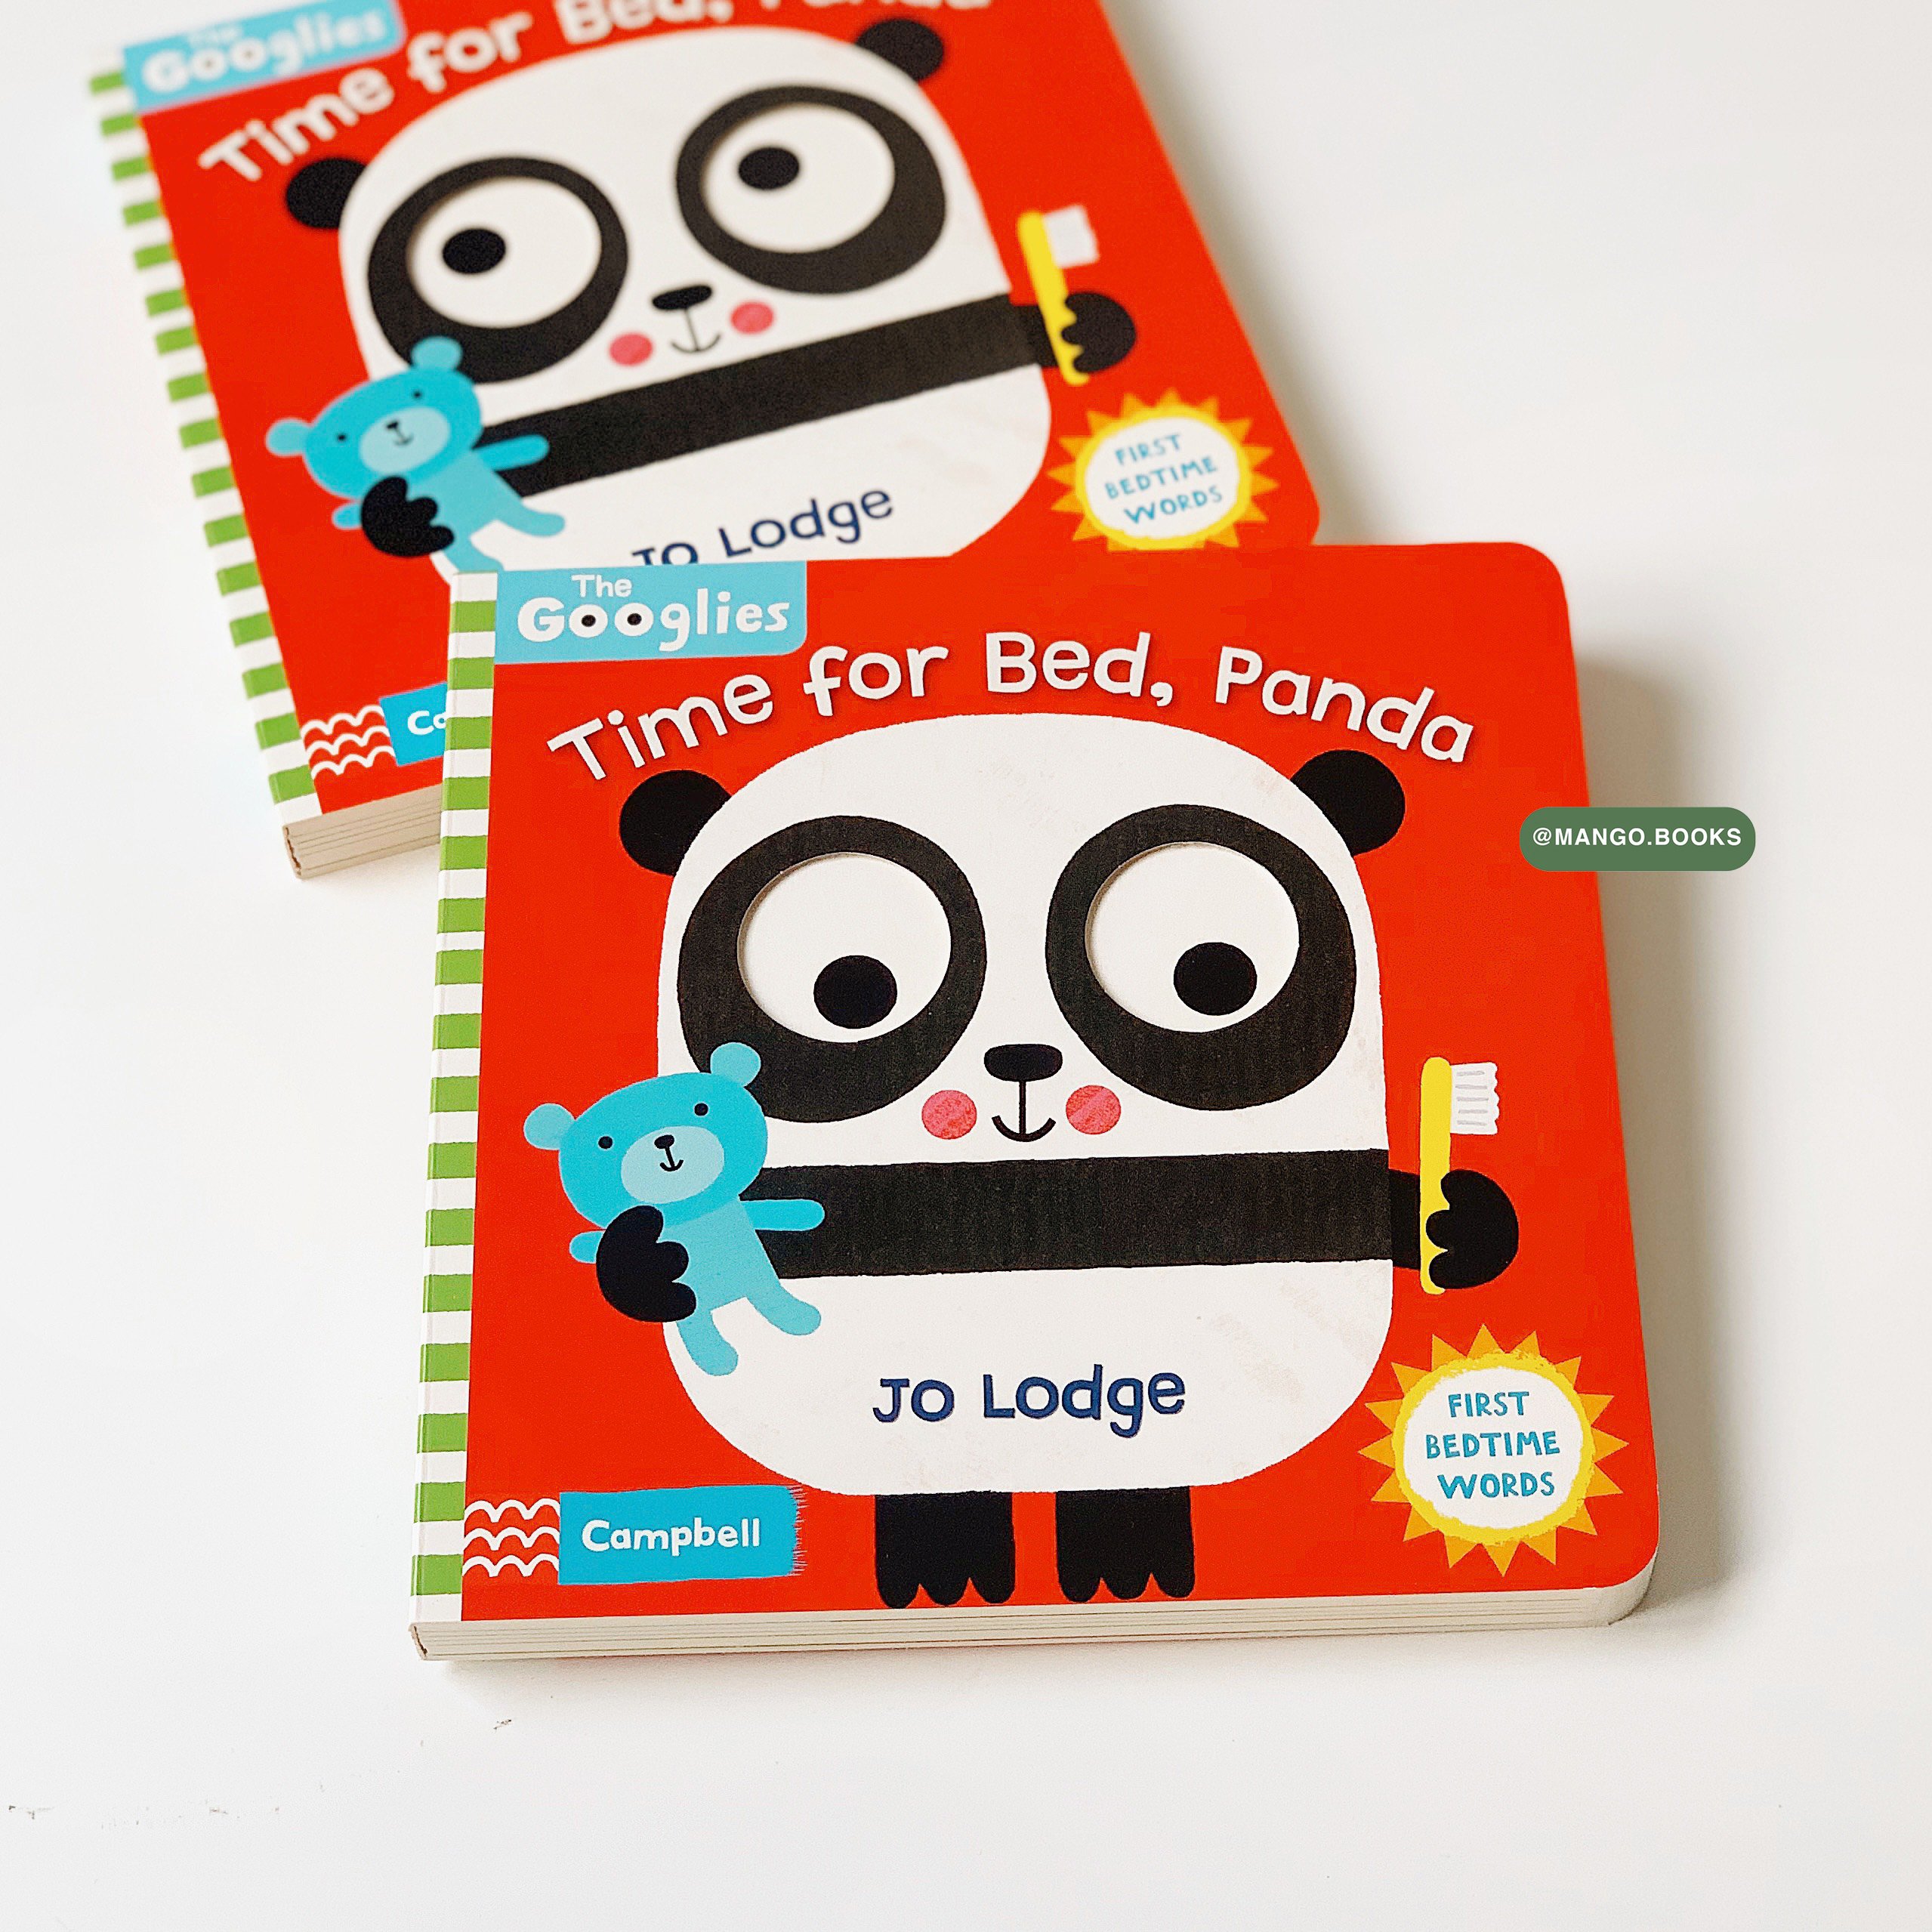 Sách Googlies: Time for Bed, Panda